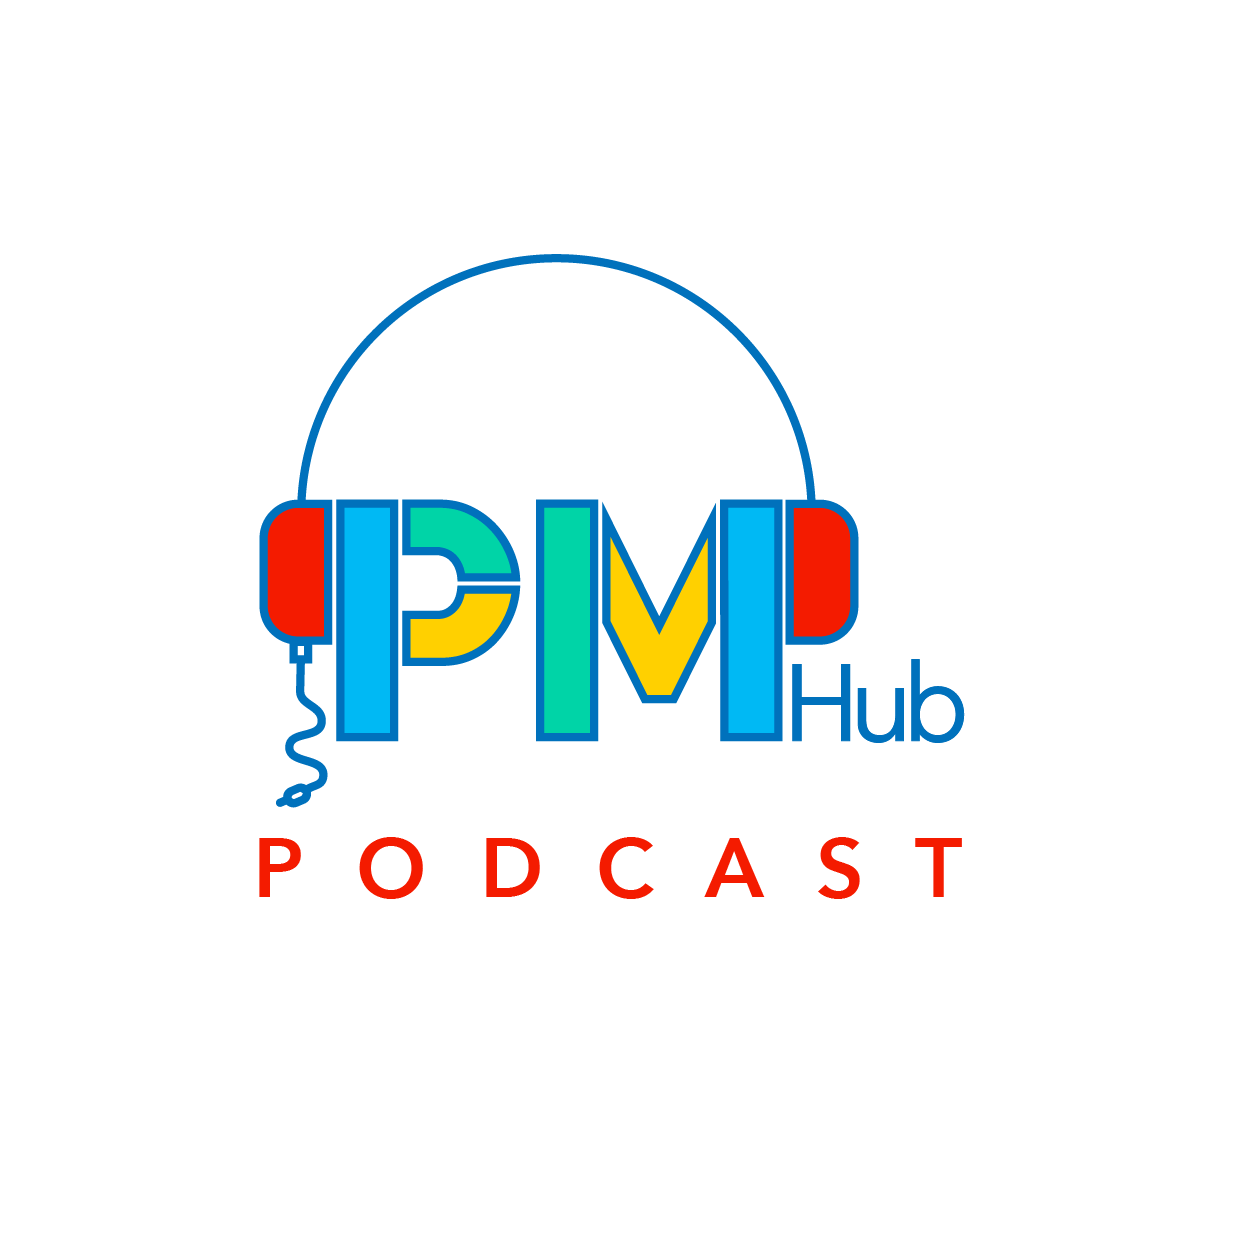 Product Manager Hub (PM Hub)